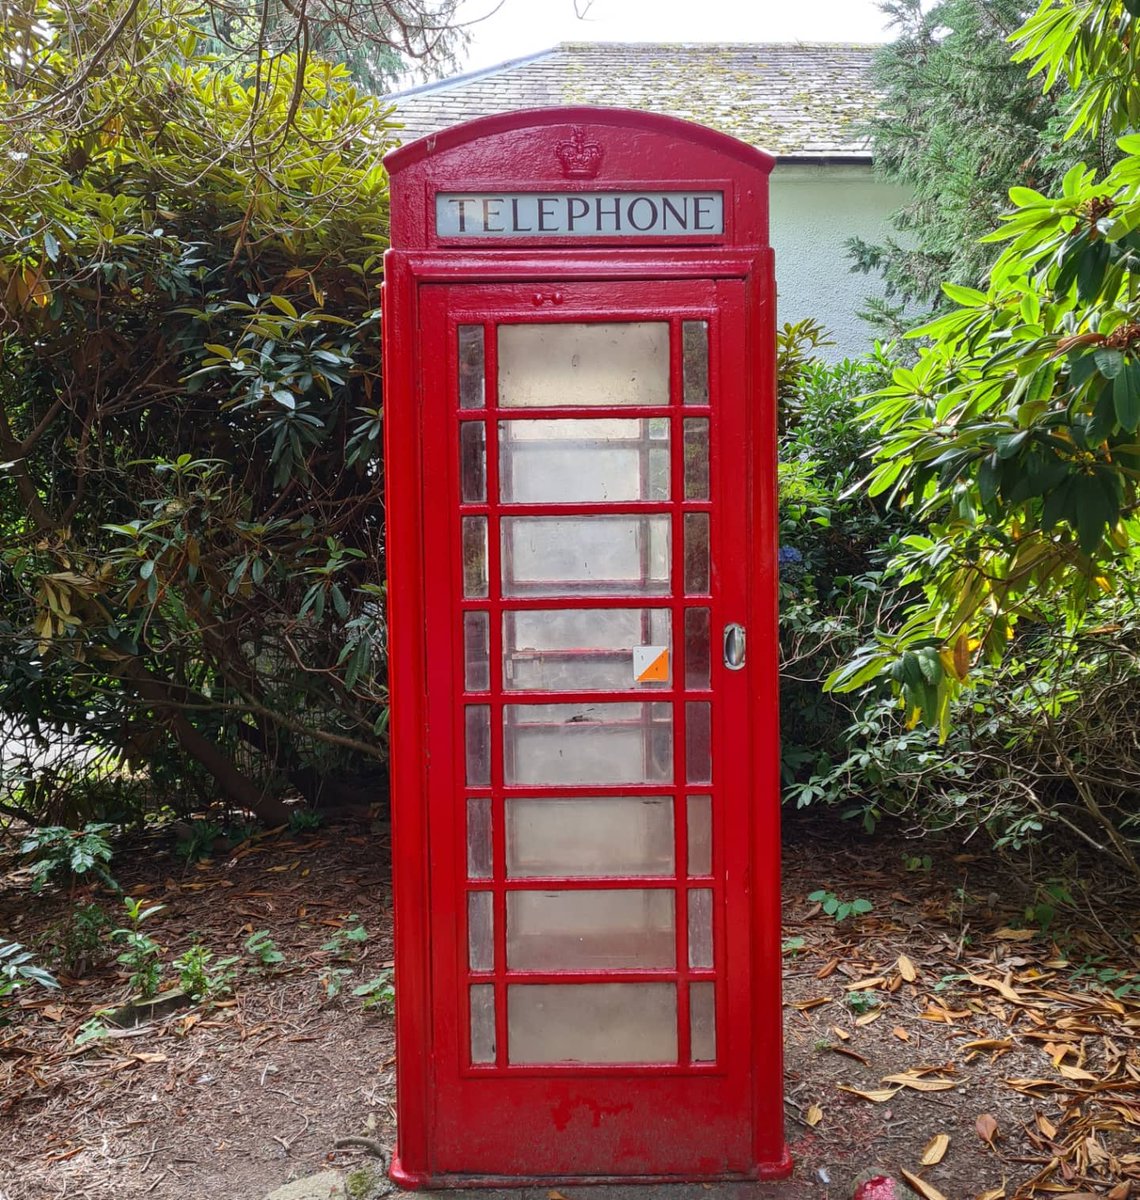 Brockhole on Windermere National Park Visitor Centre #redtelephonebox #redphonebox #k6telephonebox